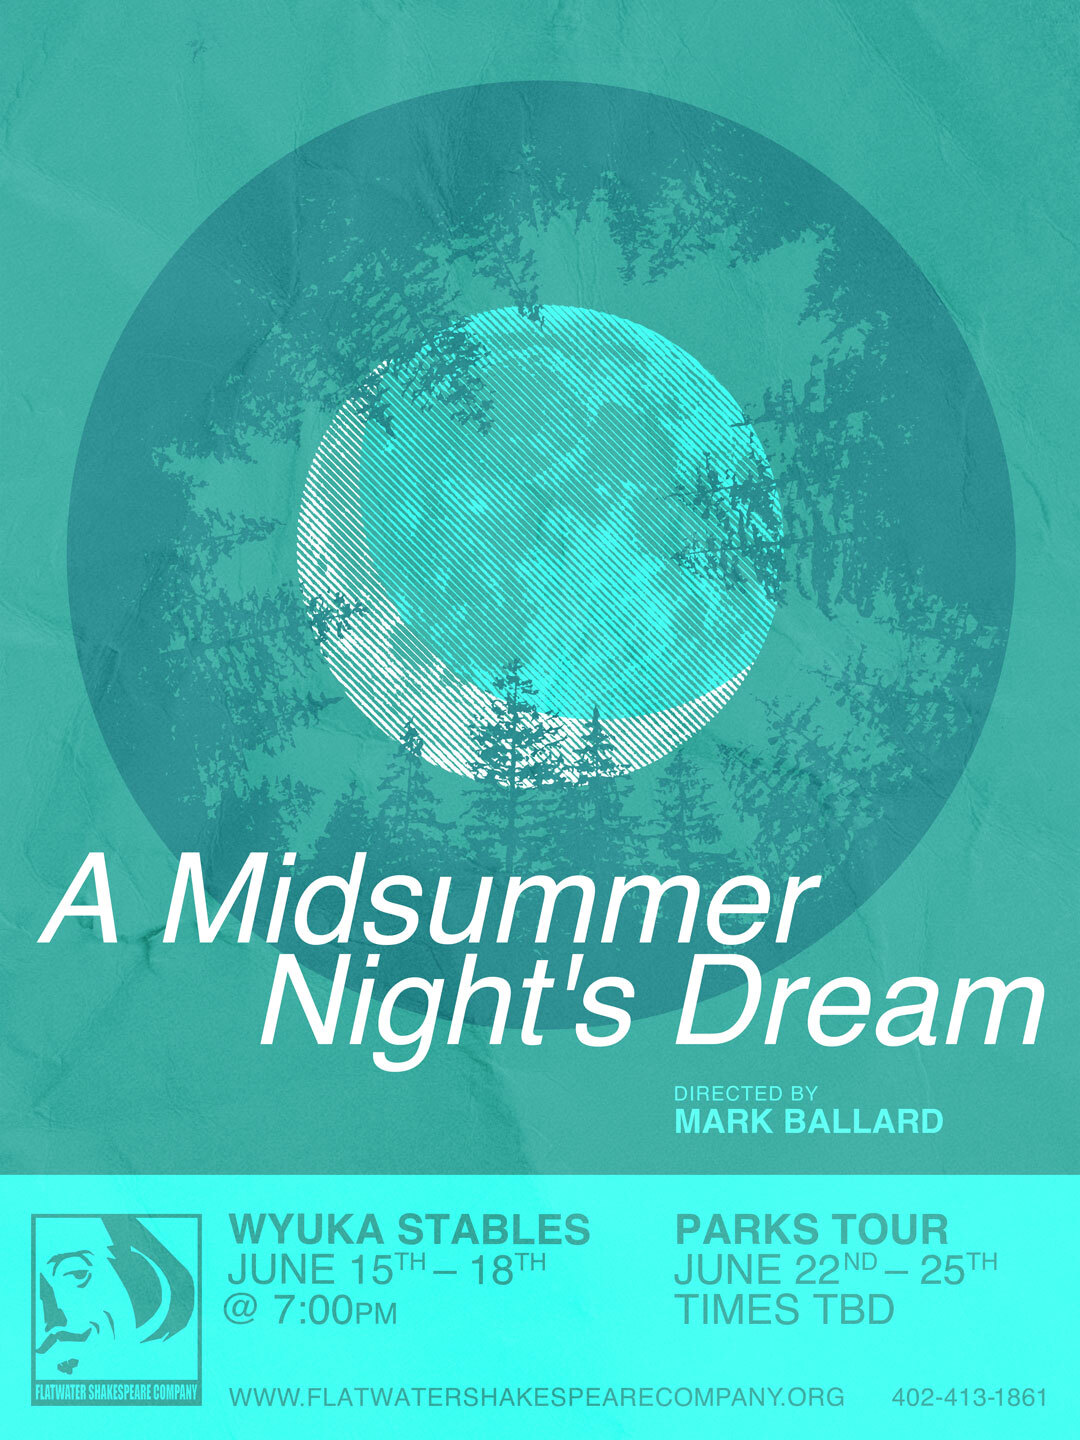 6/17 STU - STUDENT: Sat. June 17, 2023 | 7:00 p.m. - 9:00 p.m. CST | Wyuka Stables (A Midsummer Night's Dream)